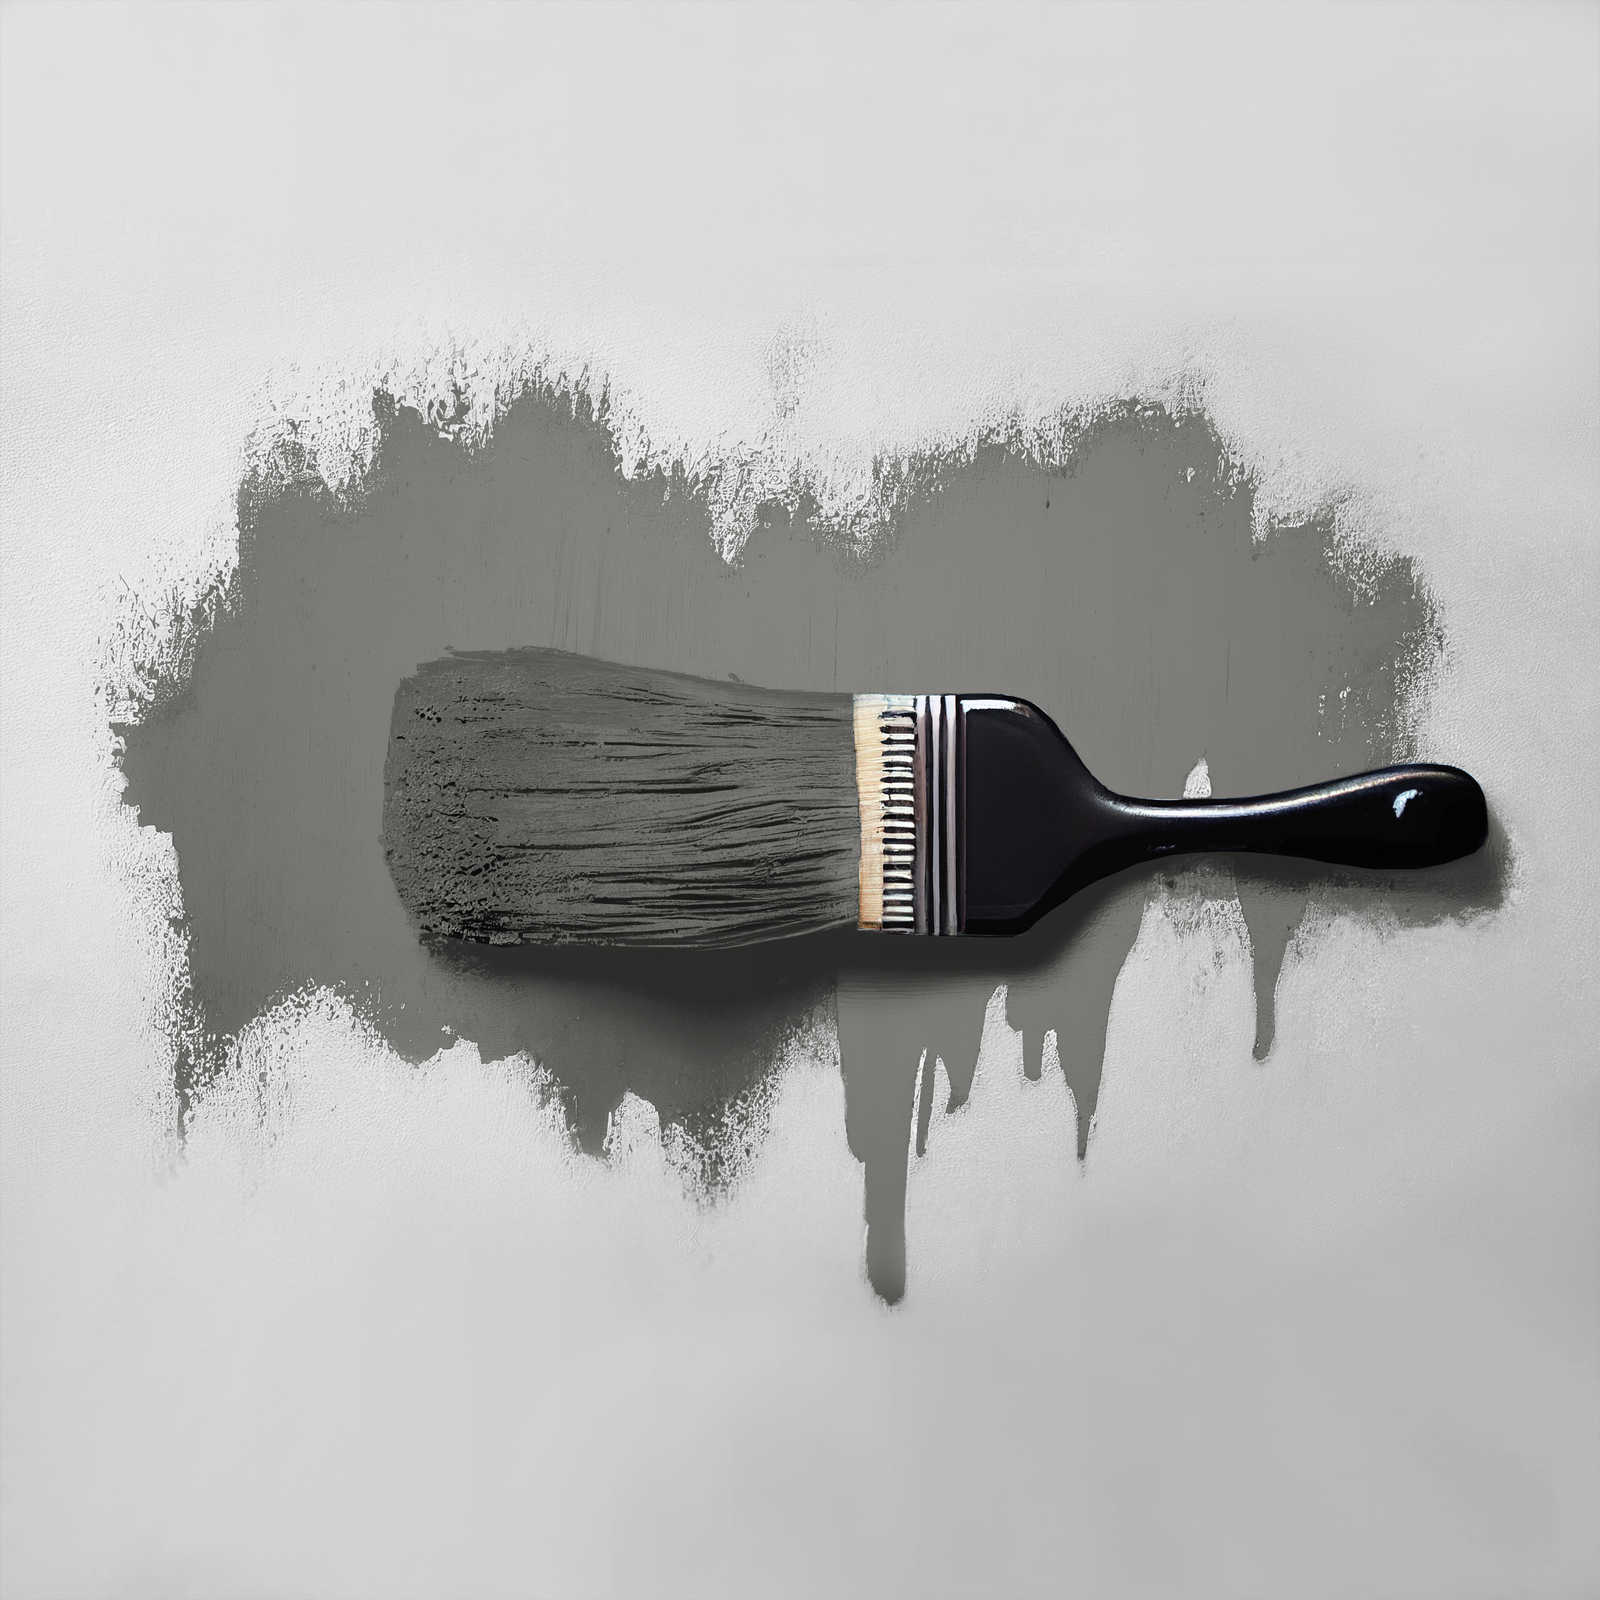             Wall Paint TCK1013 »Poised Pepper« in dark grey – 5.0 litre
        